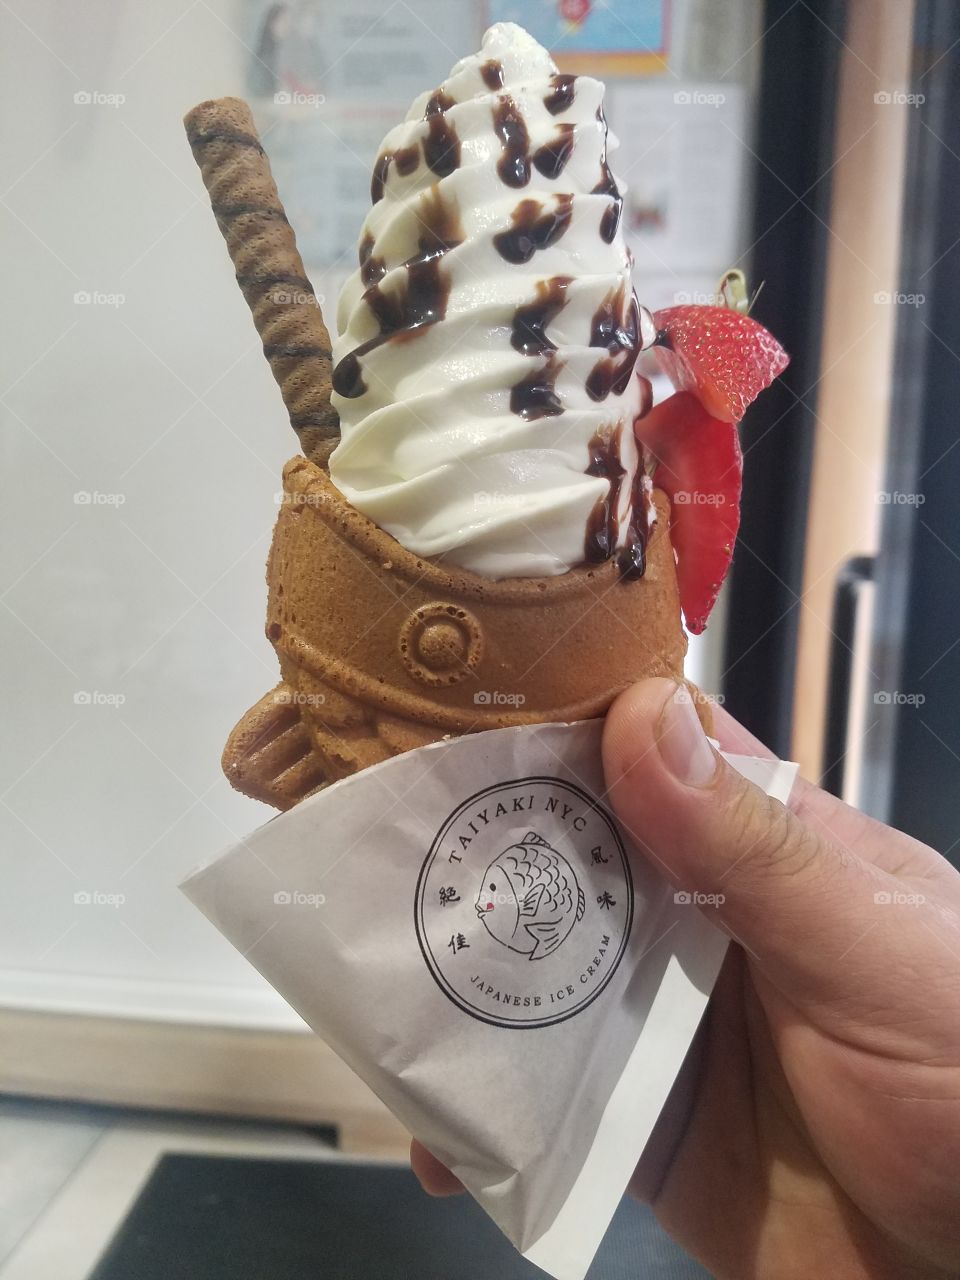 Taiyaki NYC fish ice cream